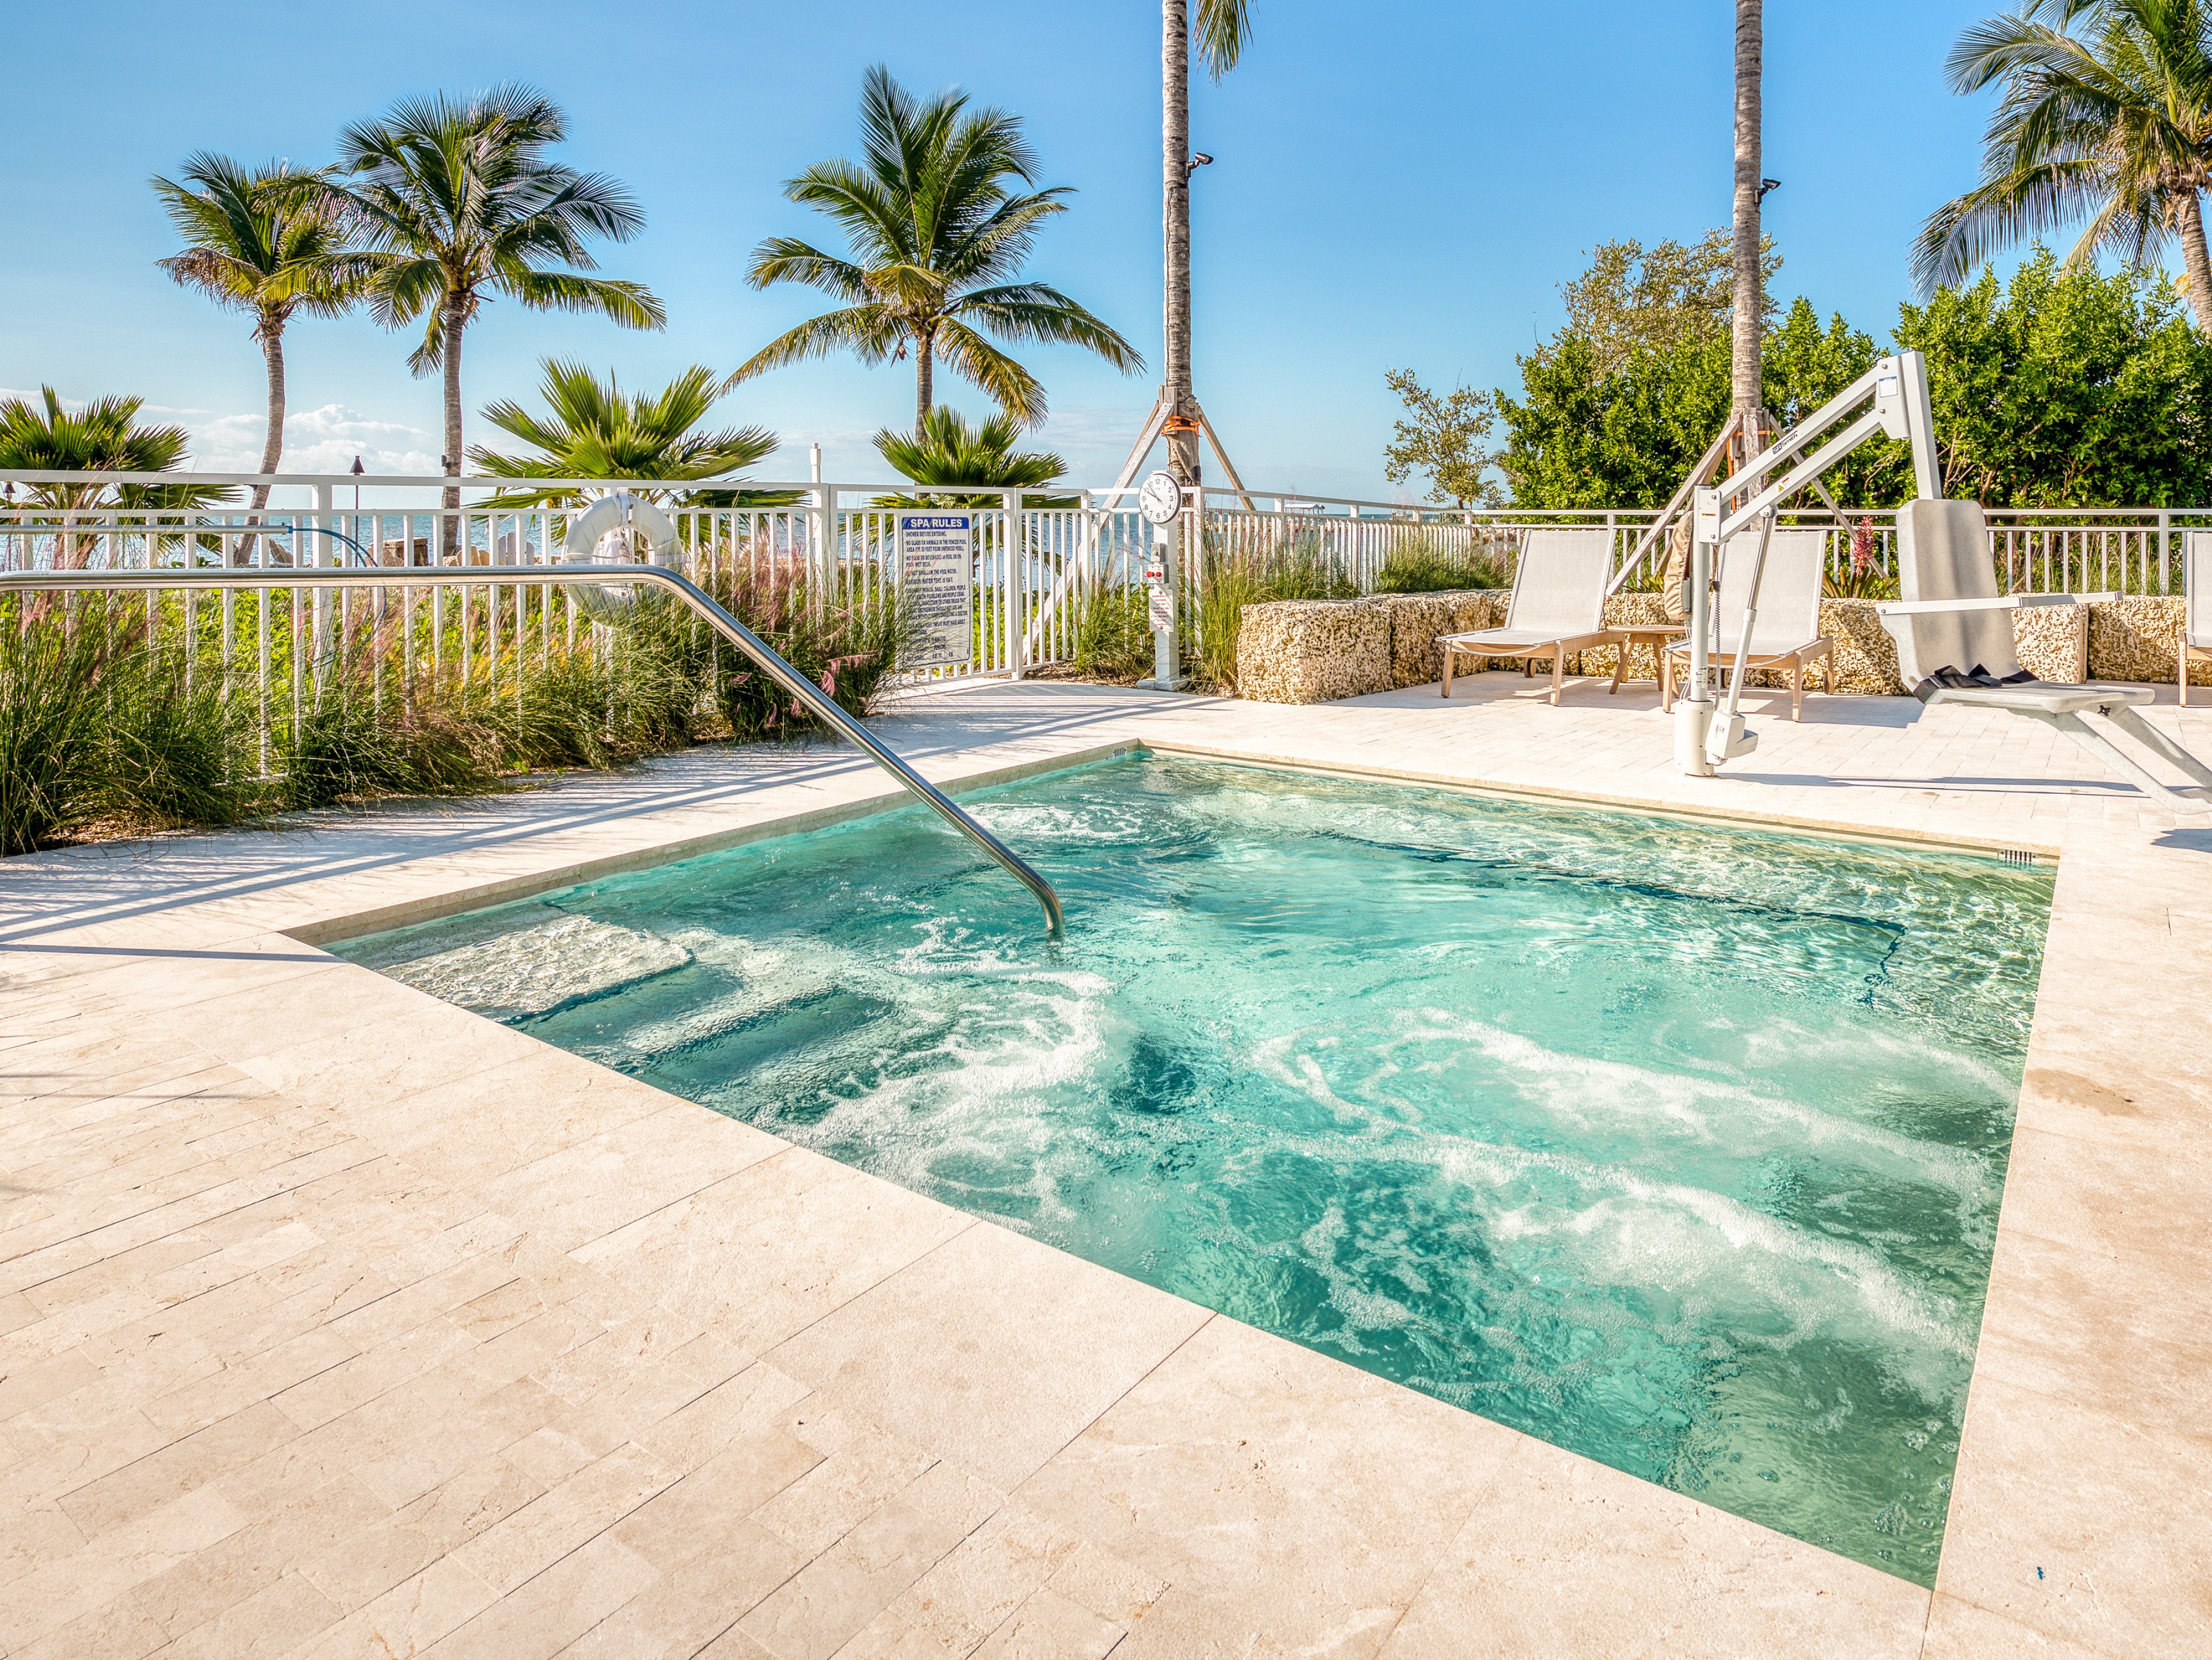 Islamorada Waterfront Suite 1 - Islamorada vacation rentals with pool access